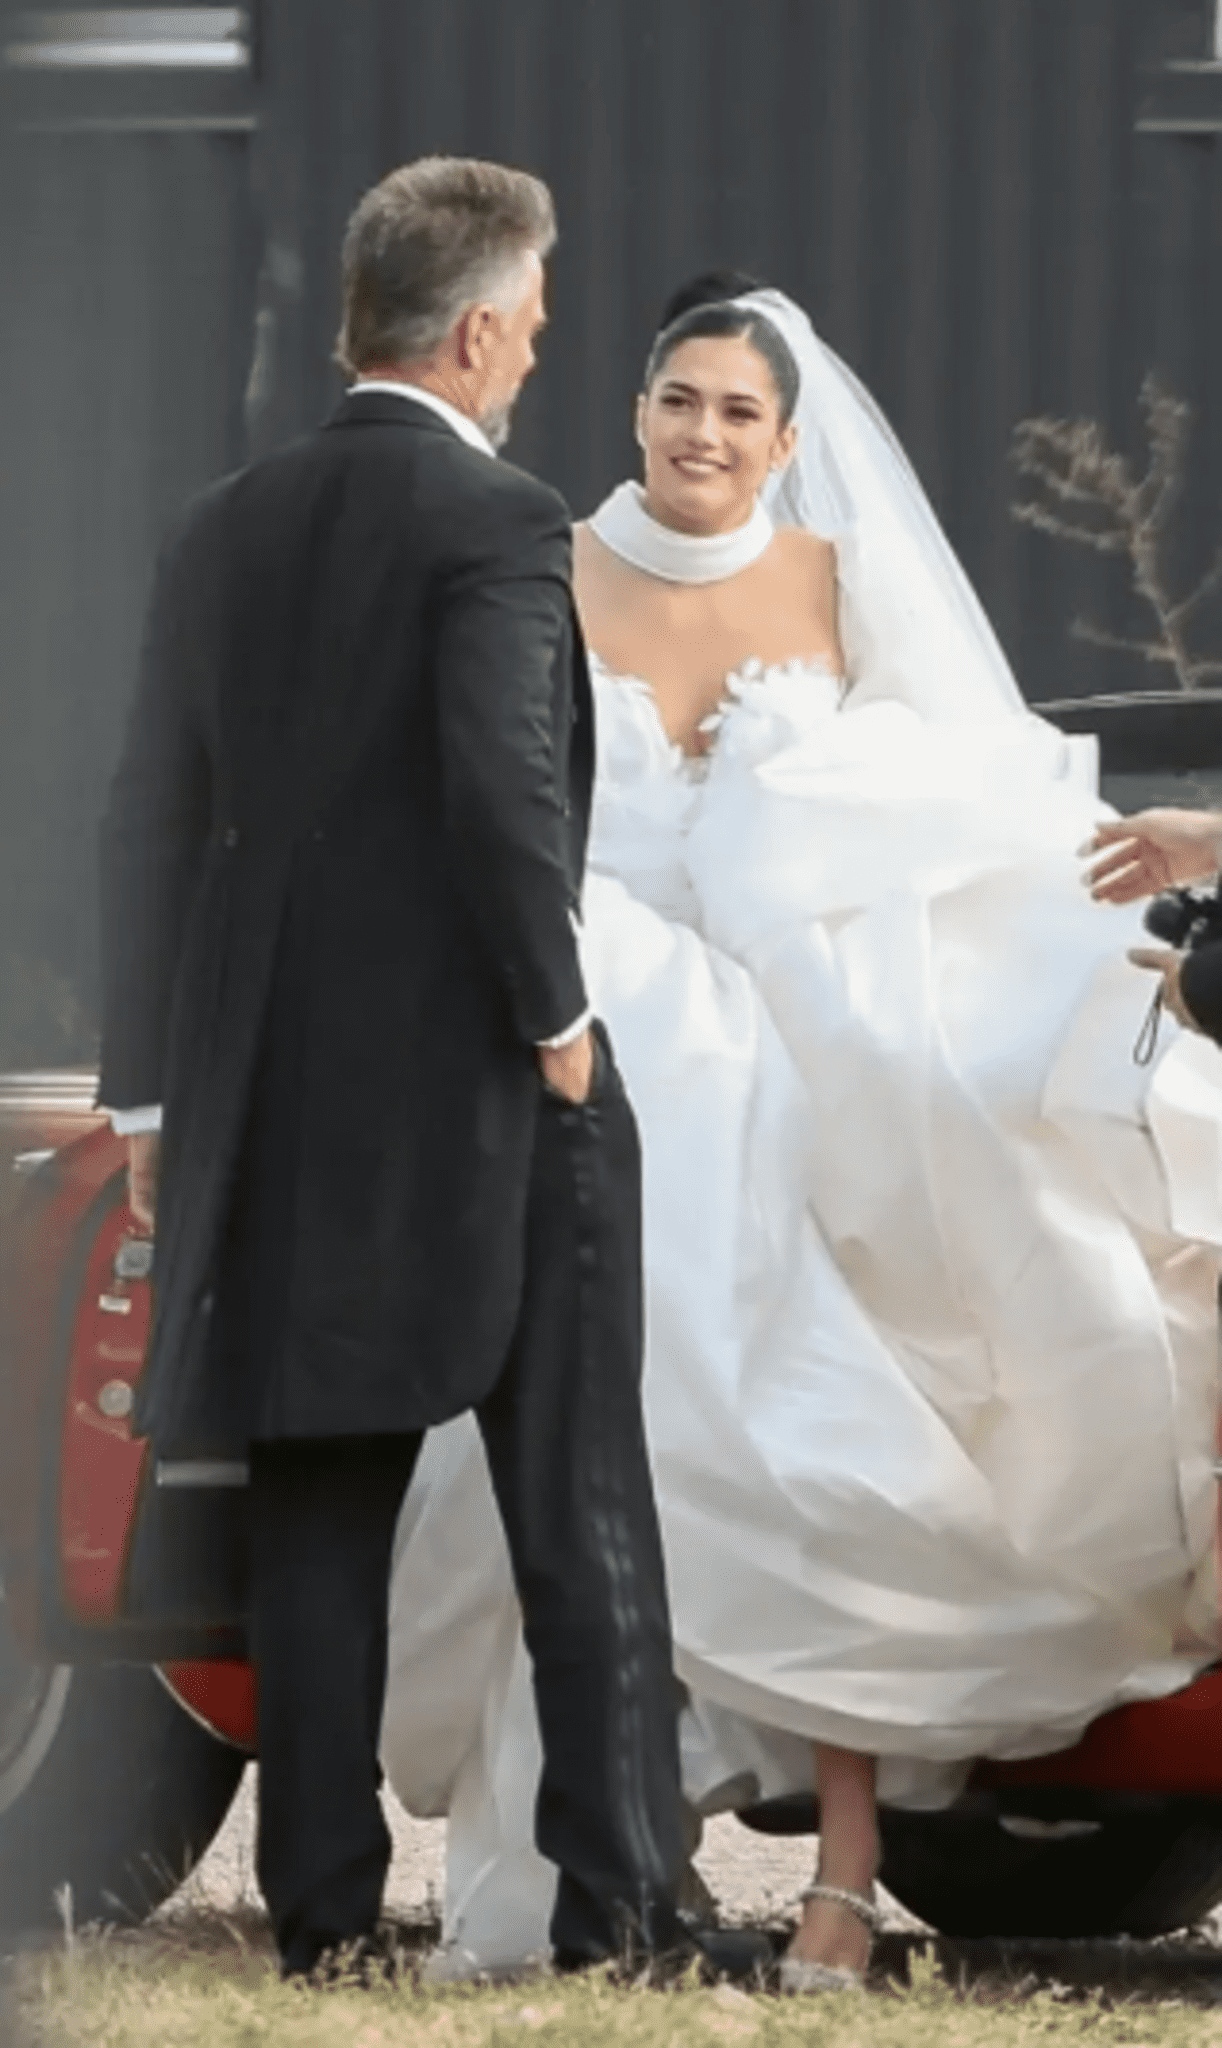 Josh Duhamel and Audra Mari got married in North Dakota.